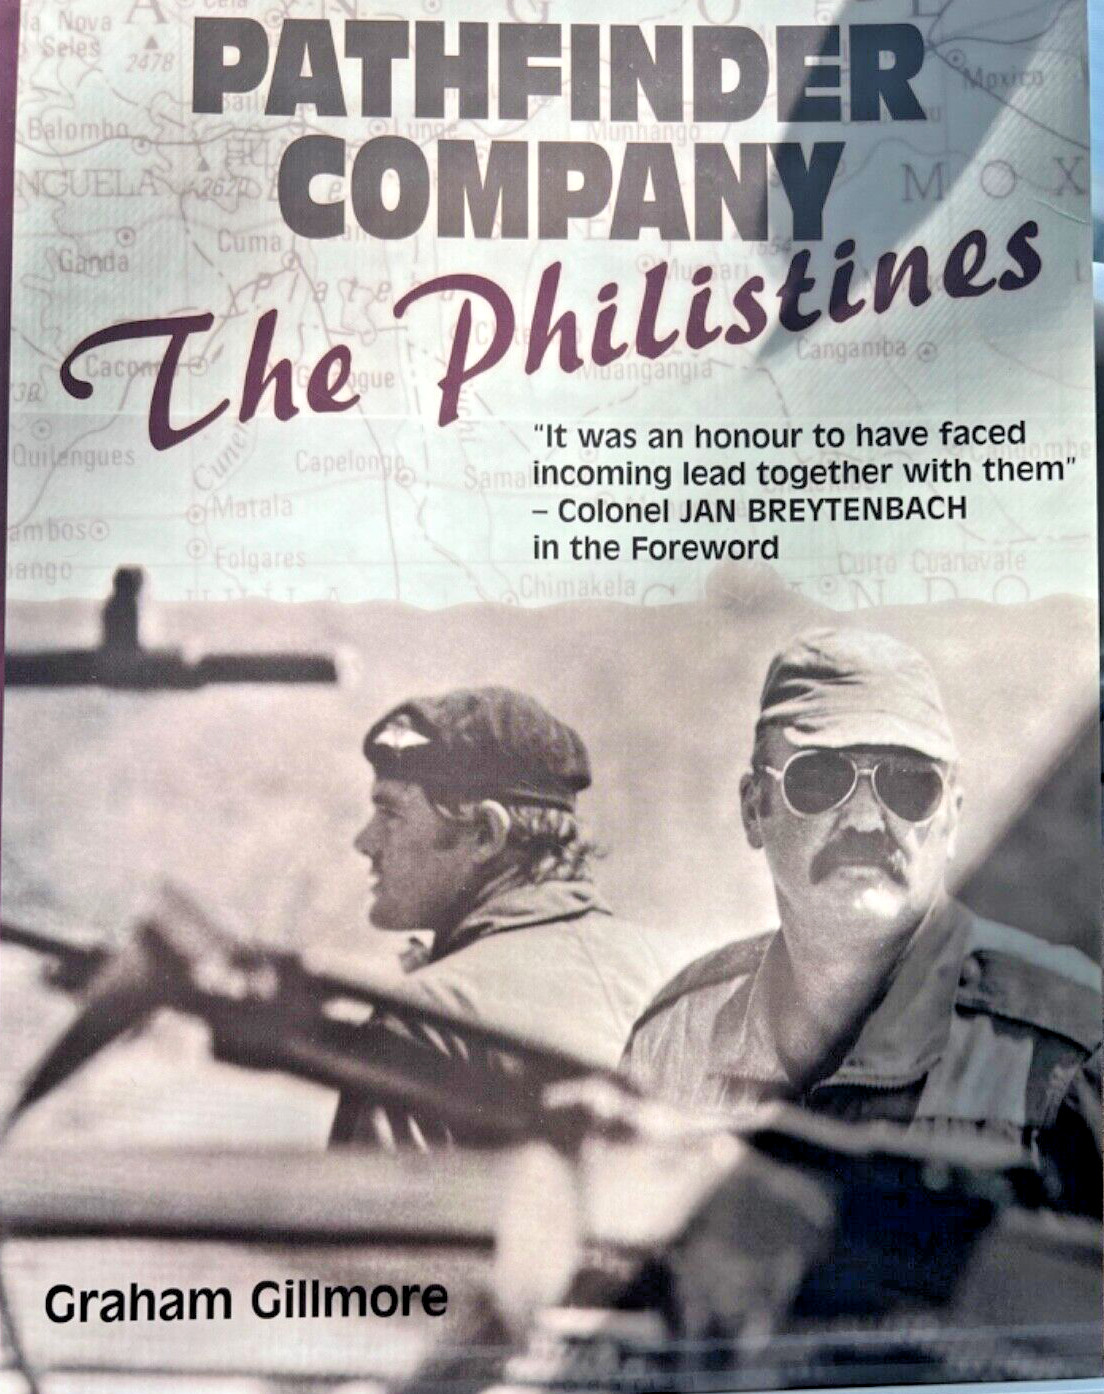 SADF Book: PATHFINDER COMPANY The Philistines